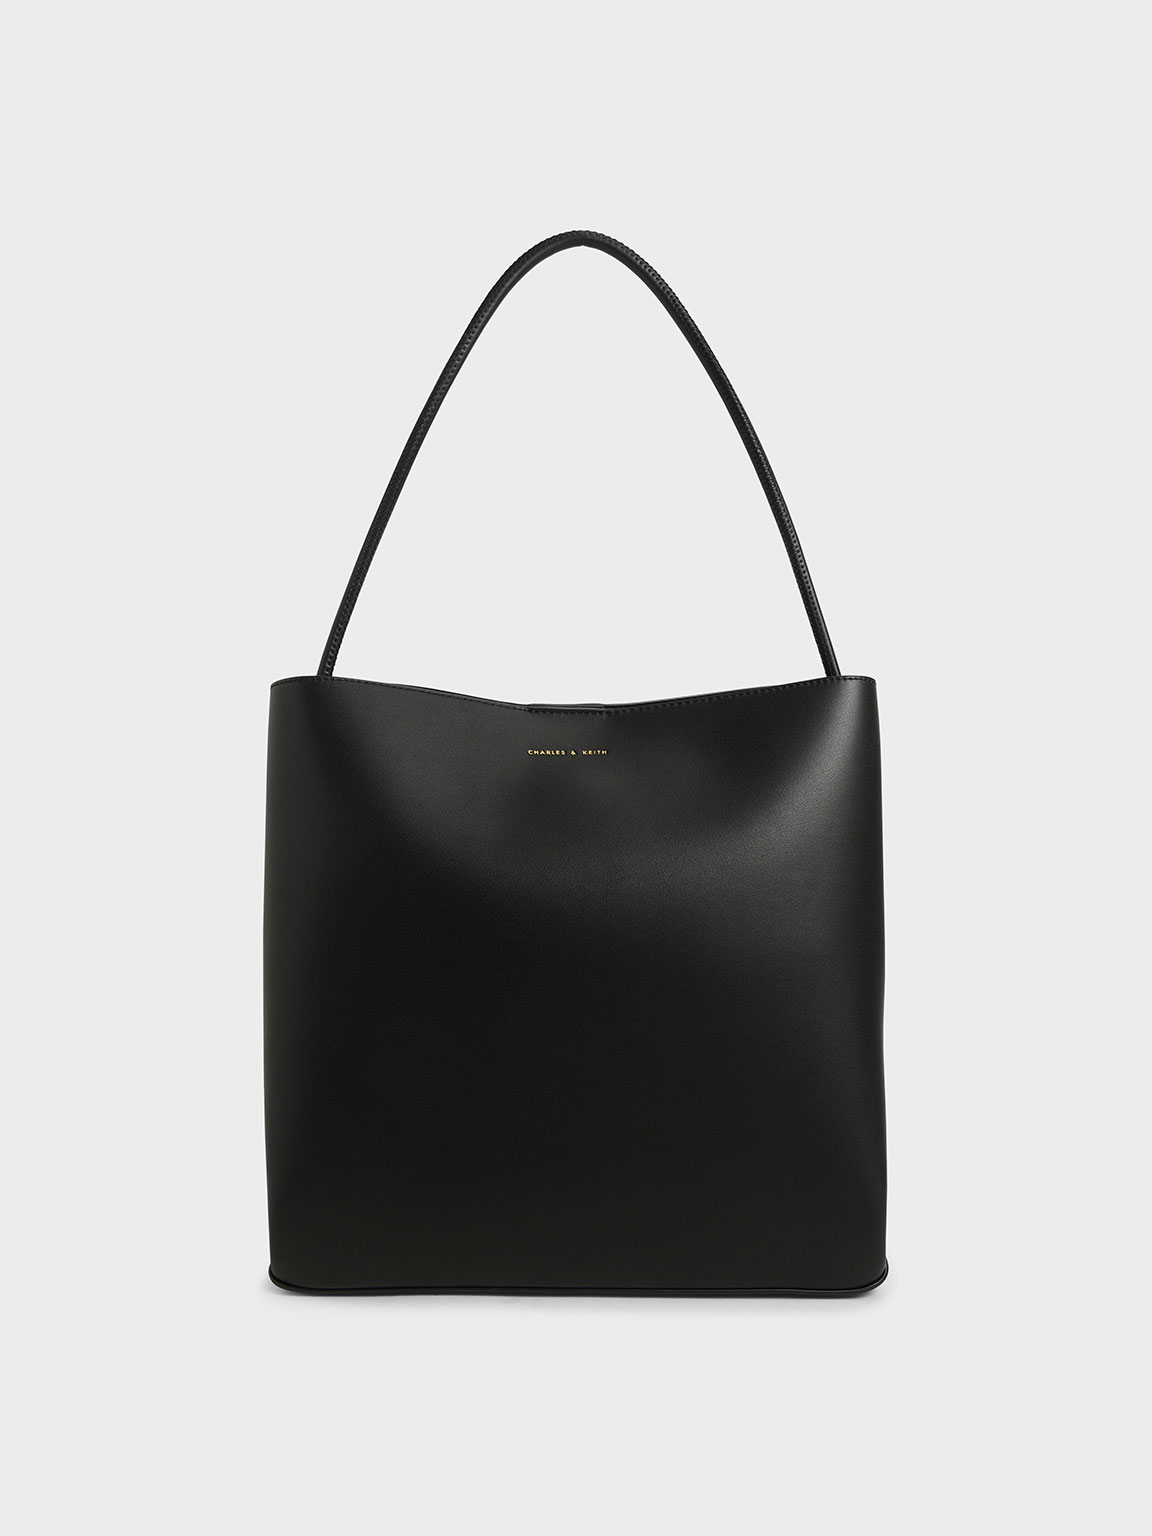 Pin on Designer Handbags / Purses - Tote Bags - Wallets - Wristlets